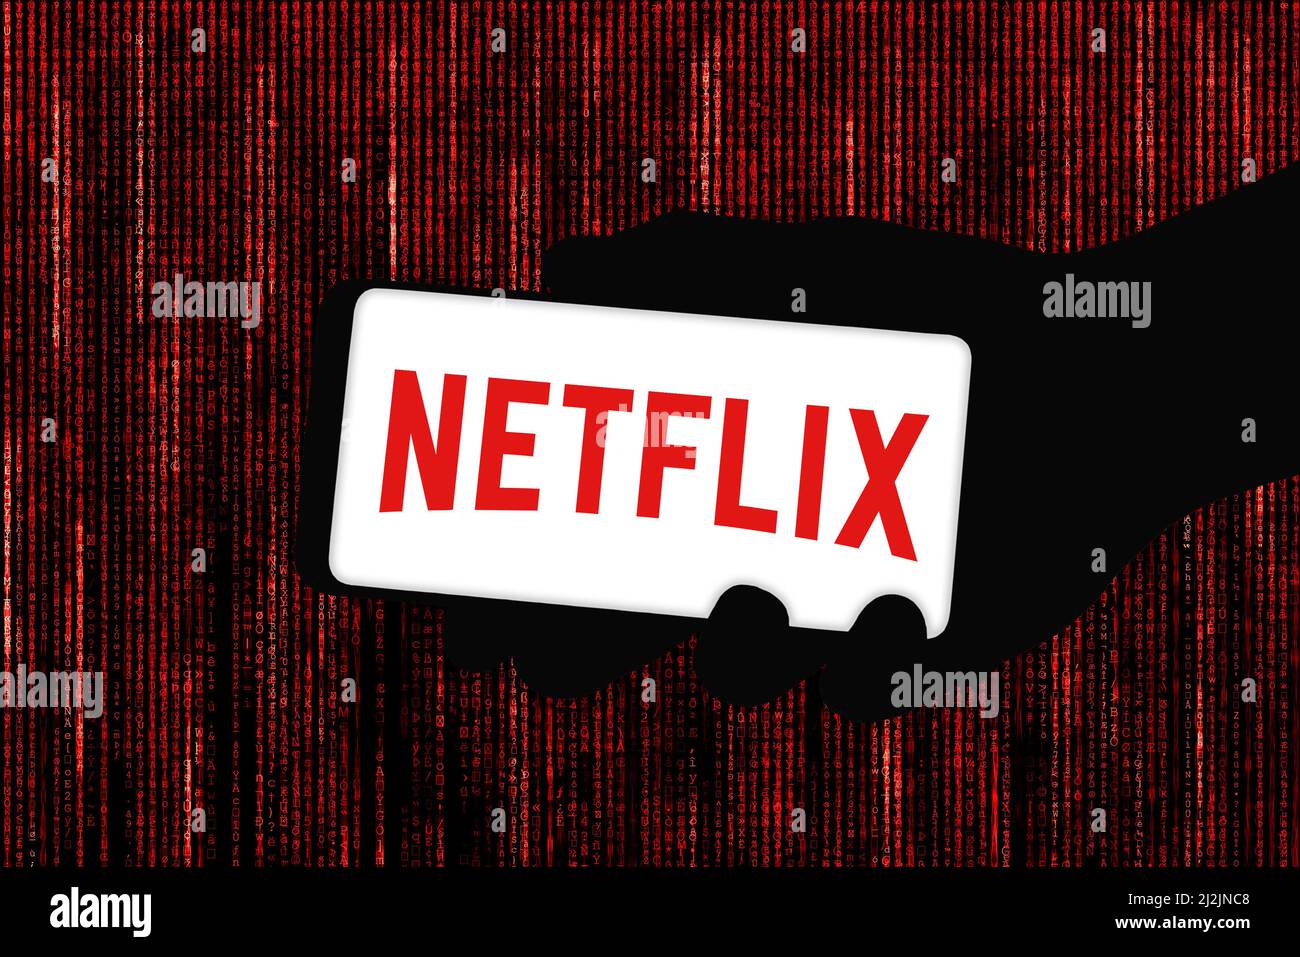 Netflix brand on mobile device Stock Photo